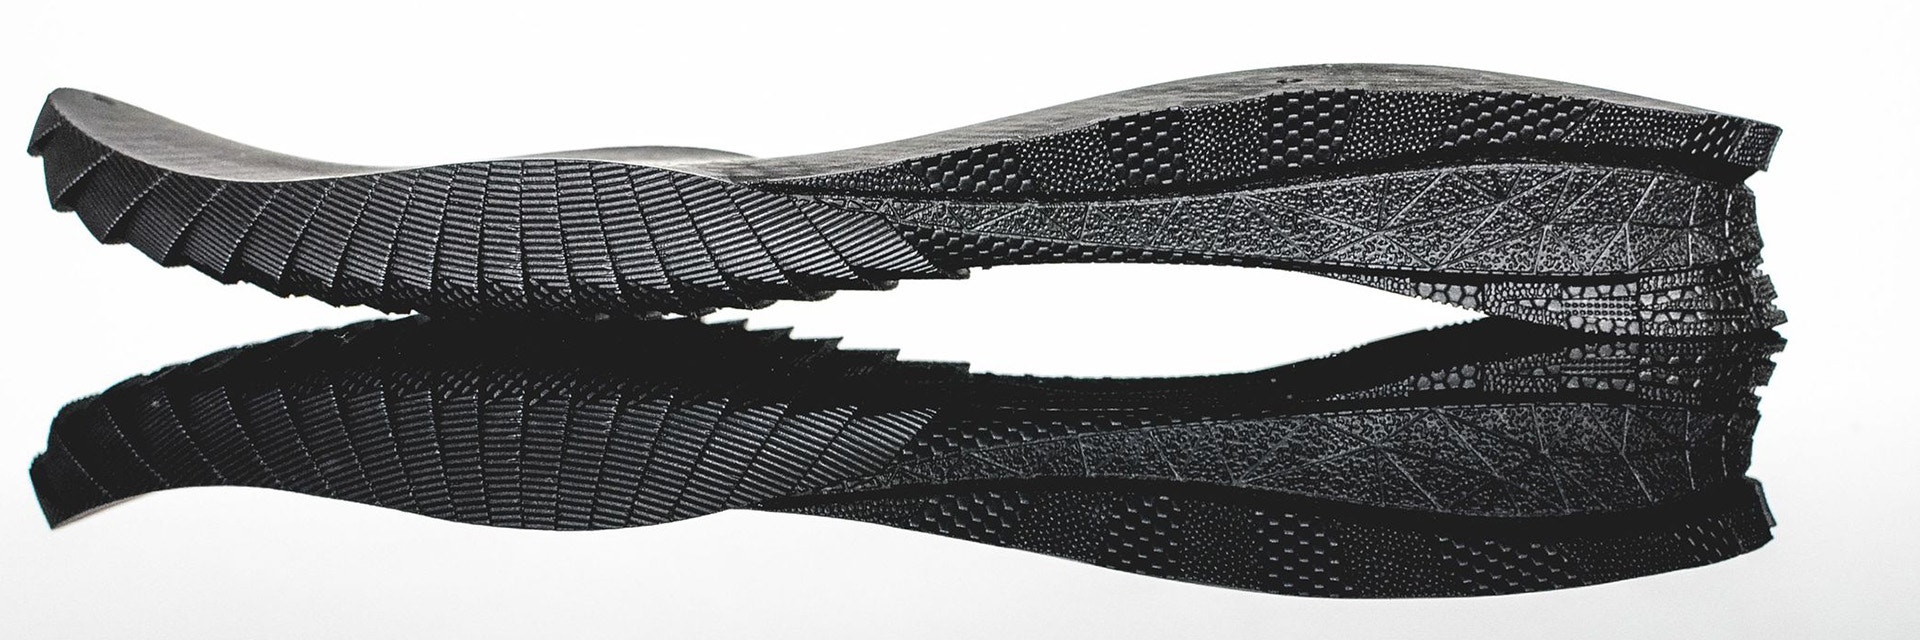 3D-gedruckte Schuhsohle mit verschiedenen Texturen